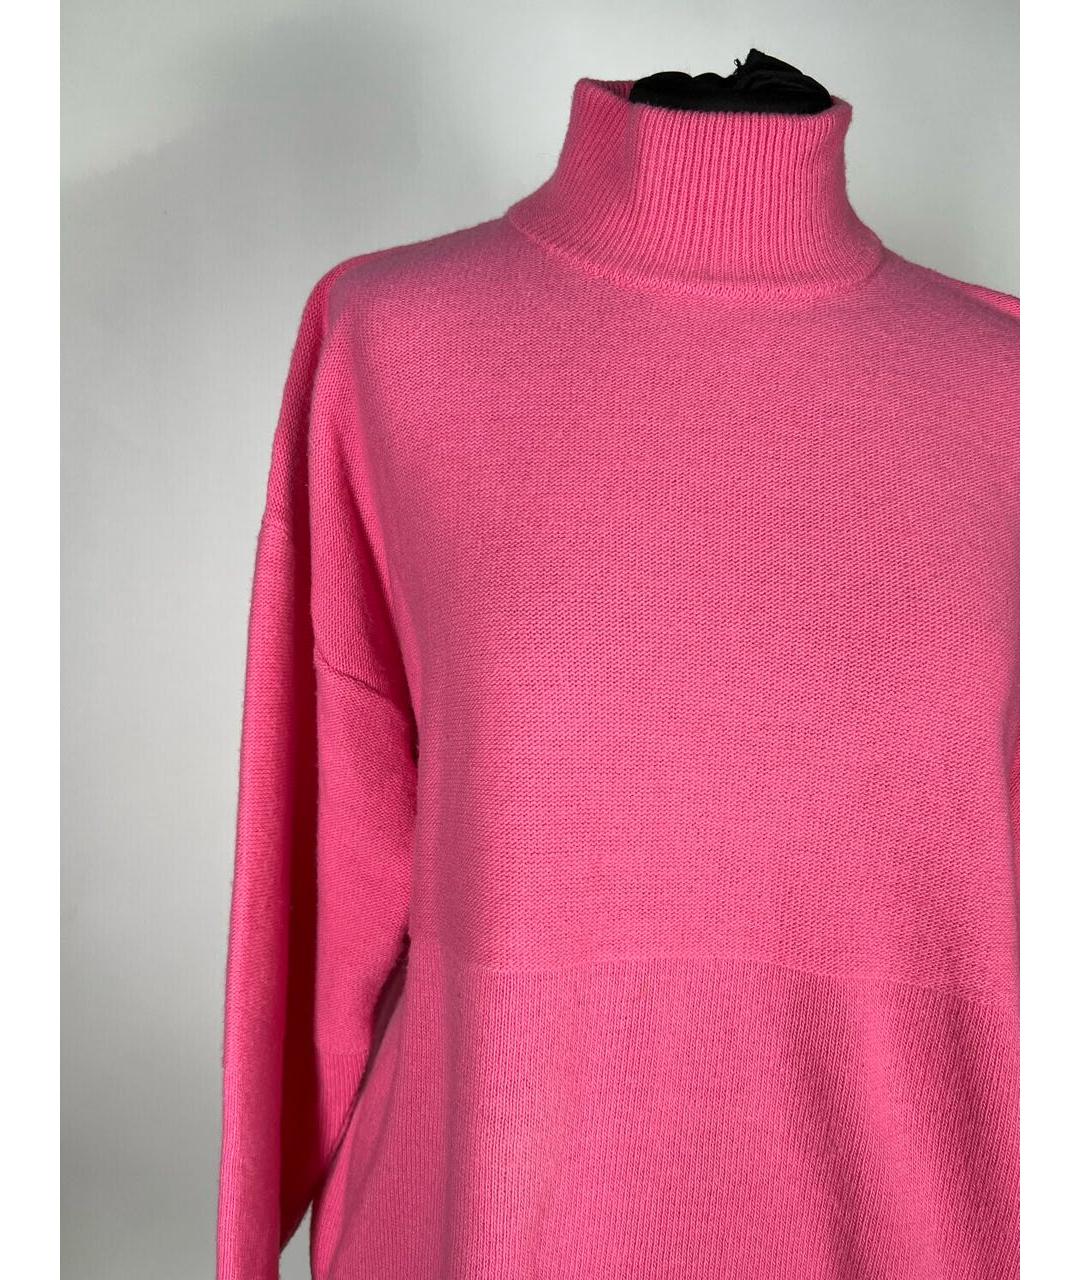 ERIKA CAVALLINI Розовый шерстяной джемпер / свитер, фото 3